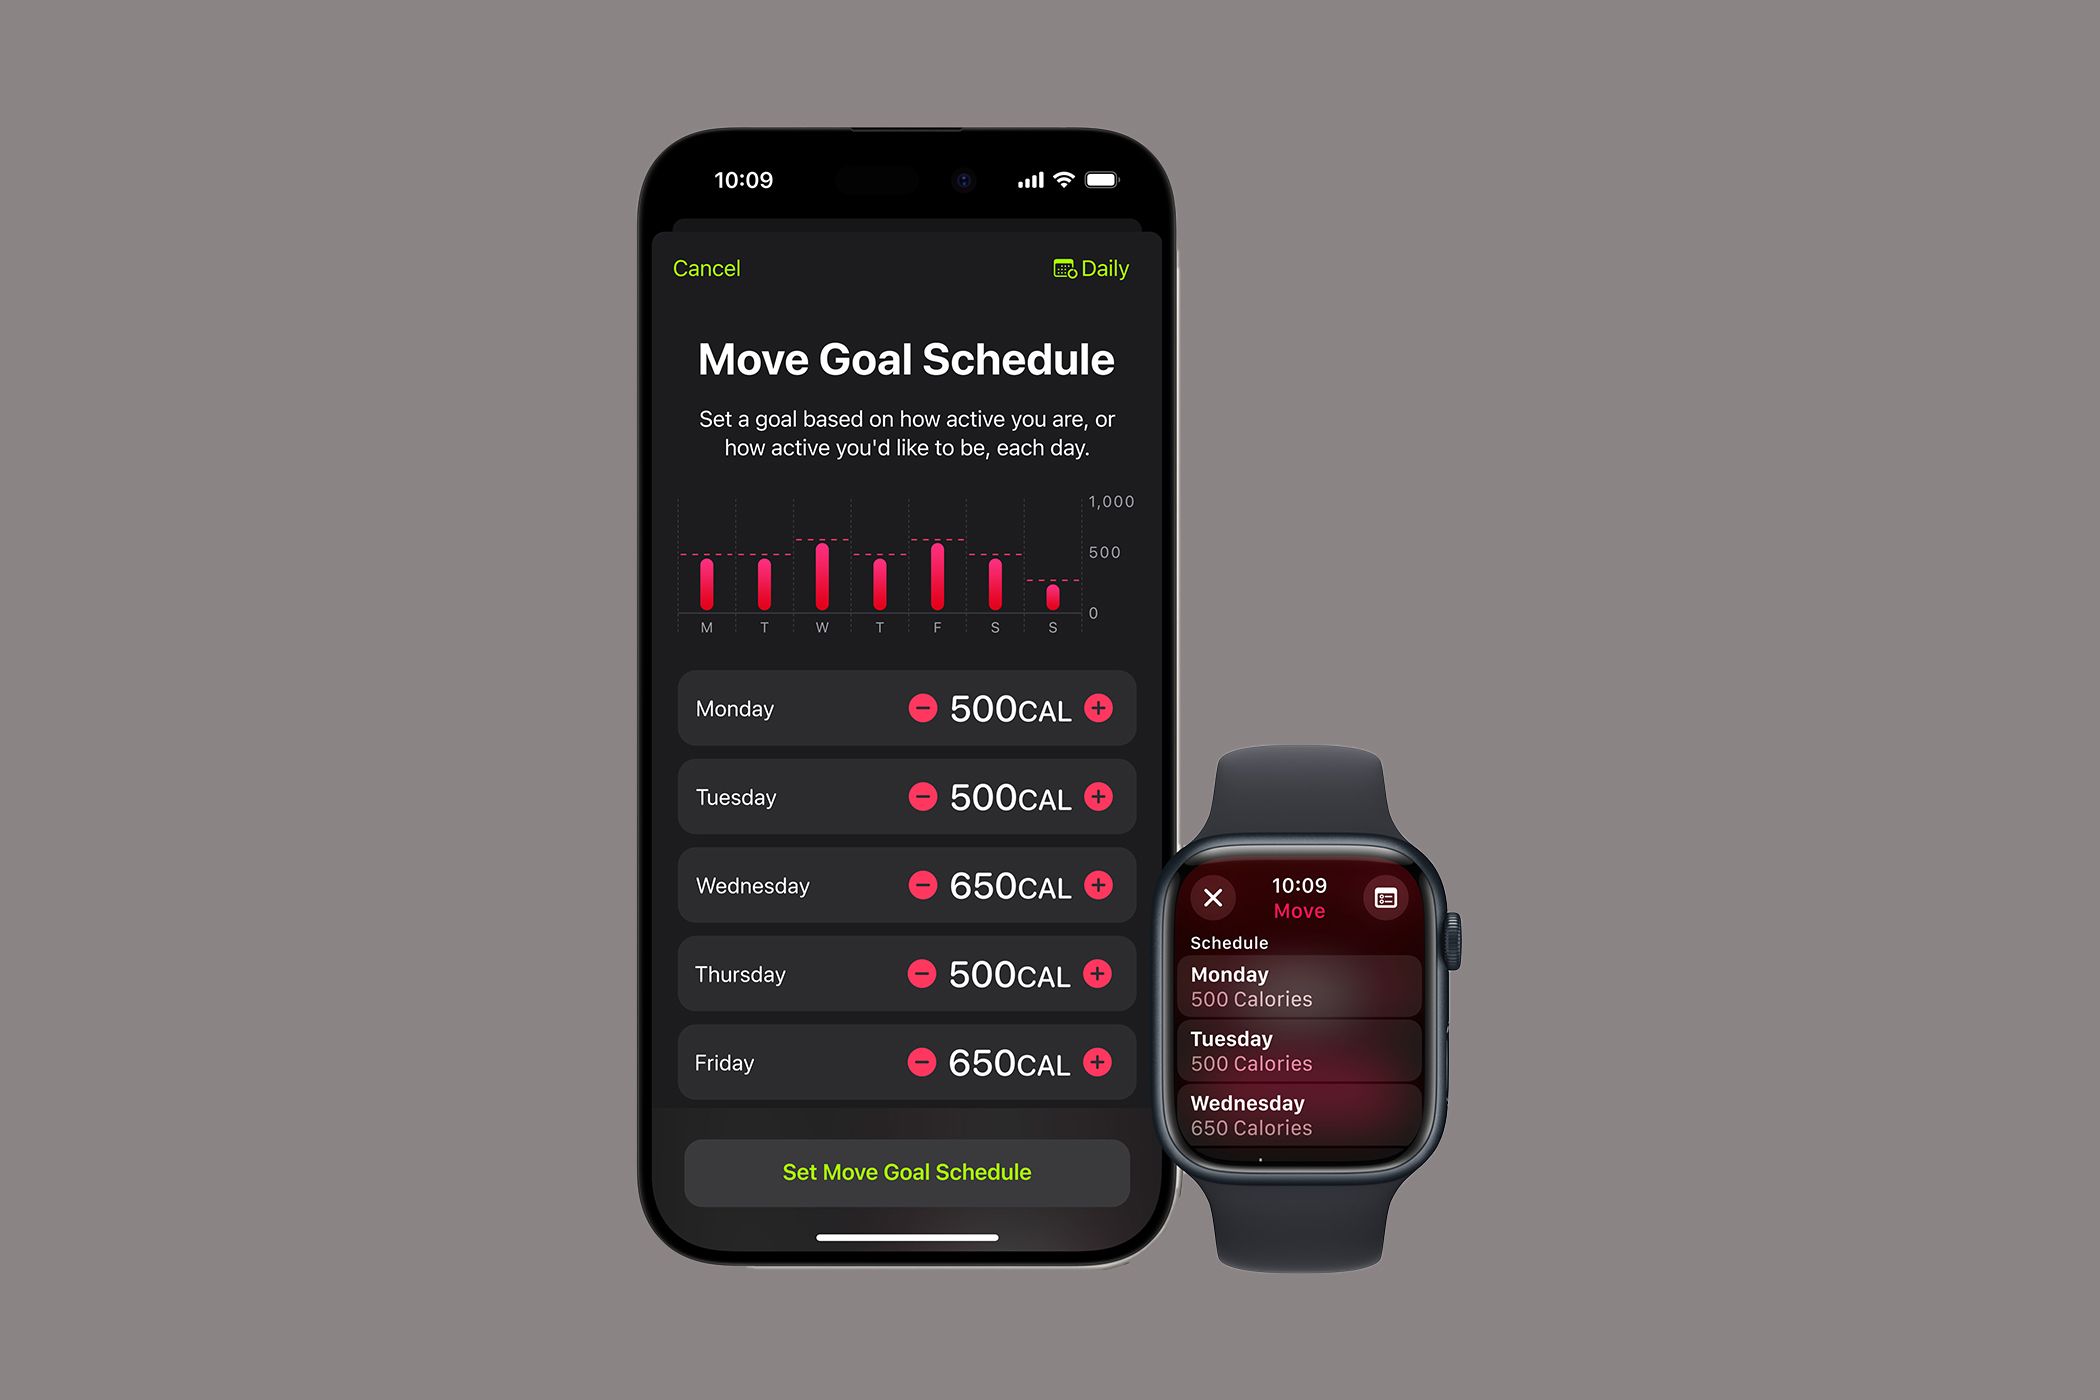 An Apple Watch beside an iPhone, both showing a Move Goal Schedule screen.